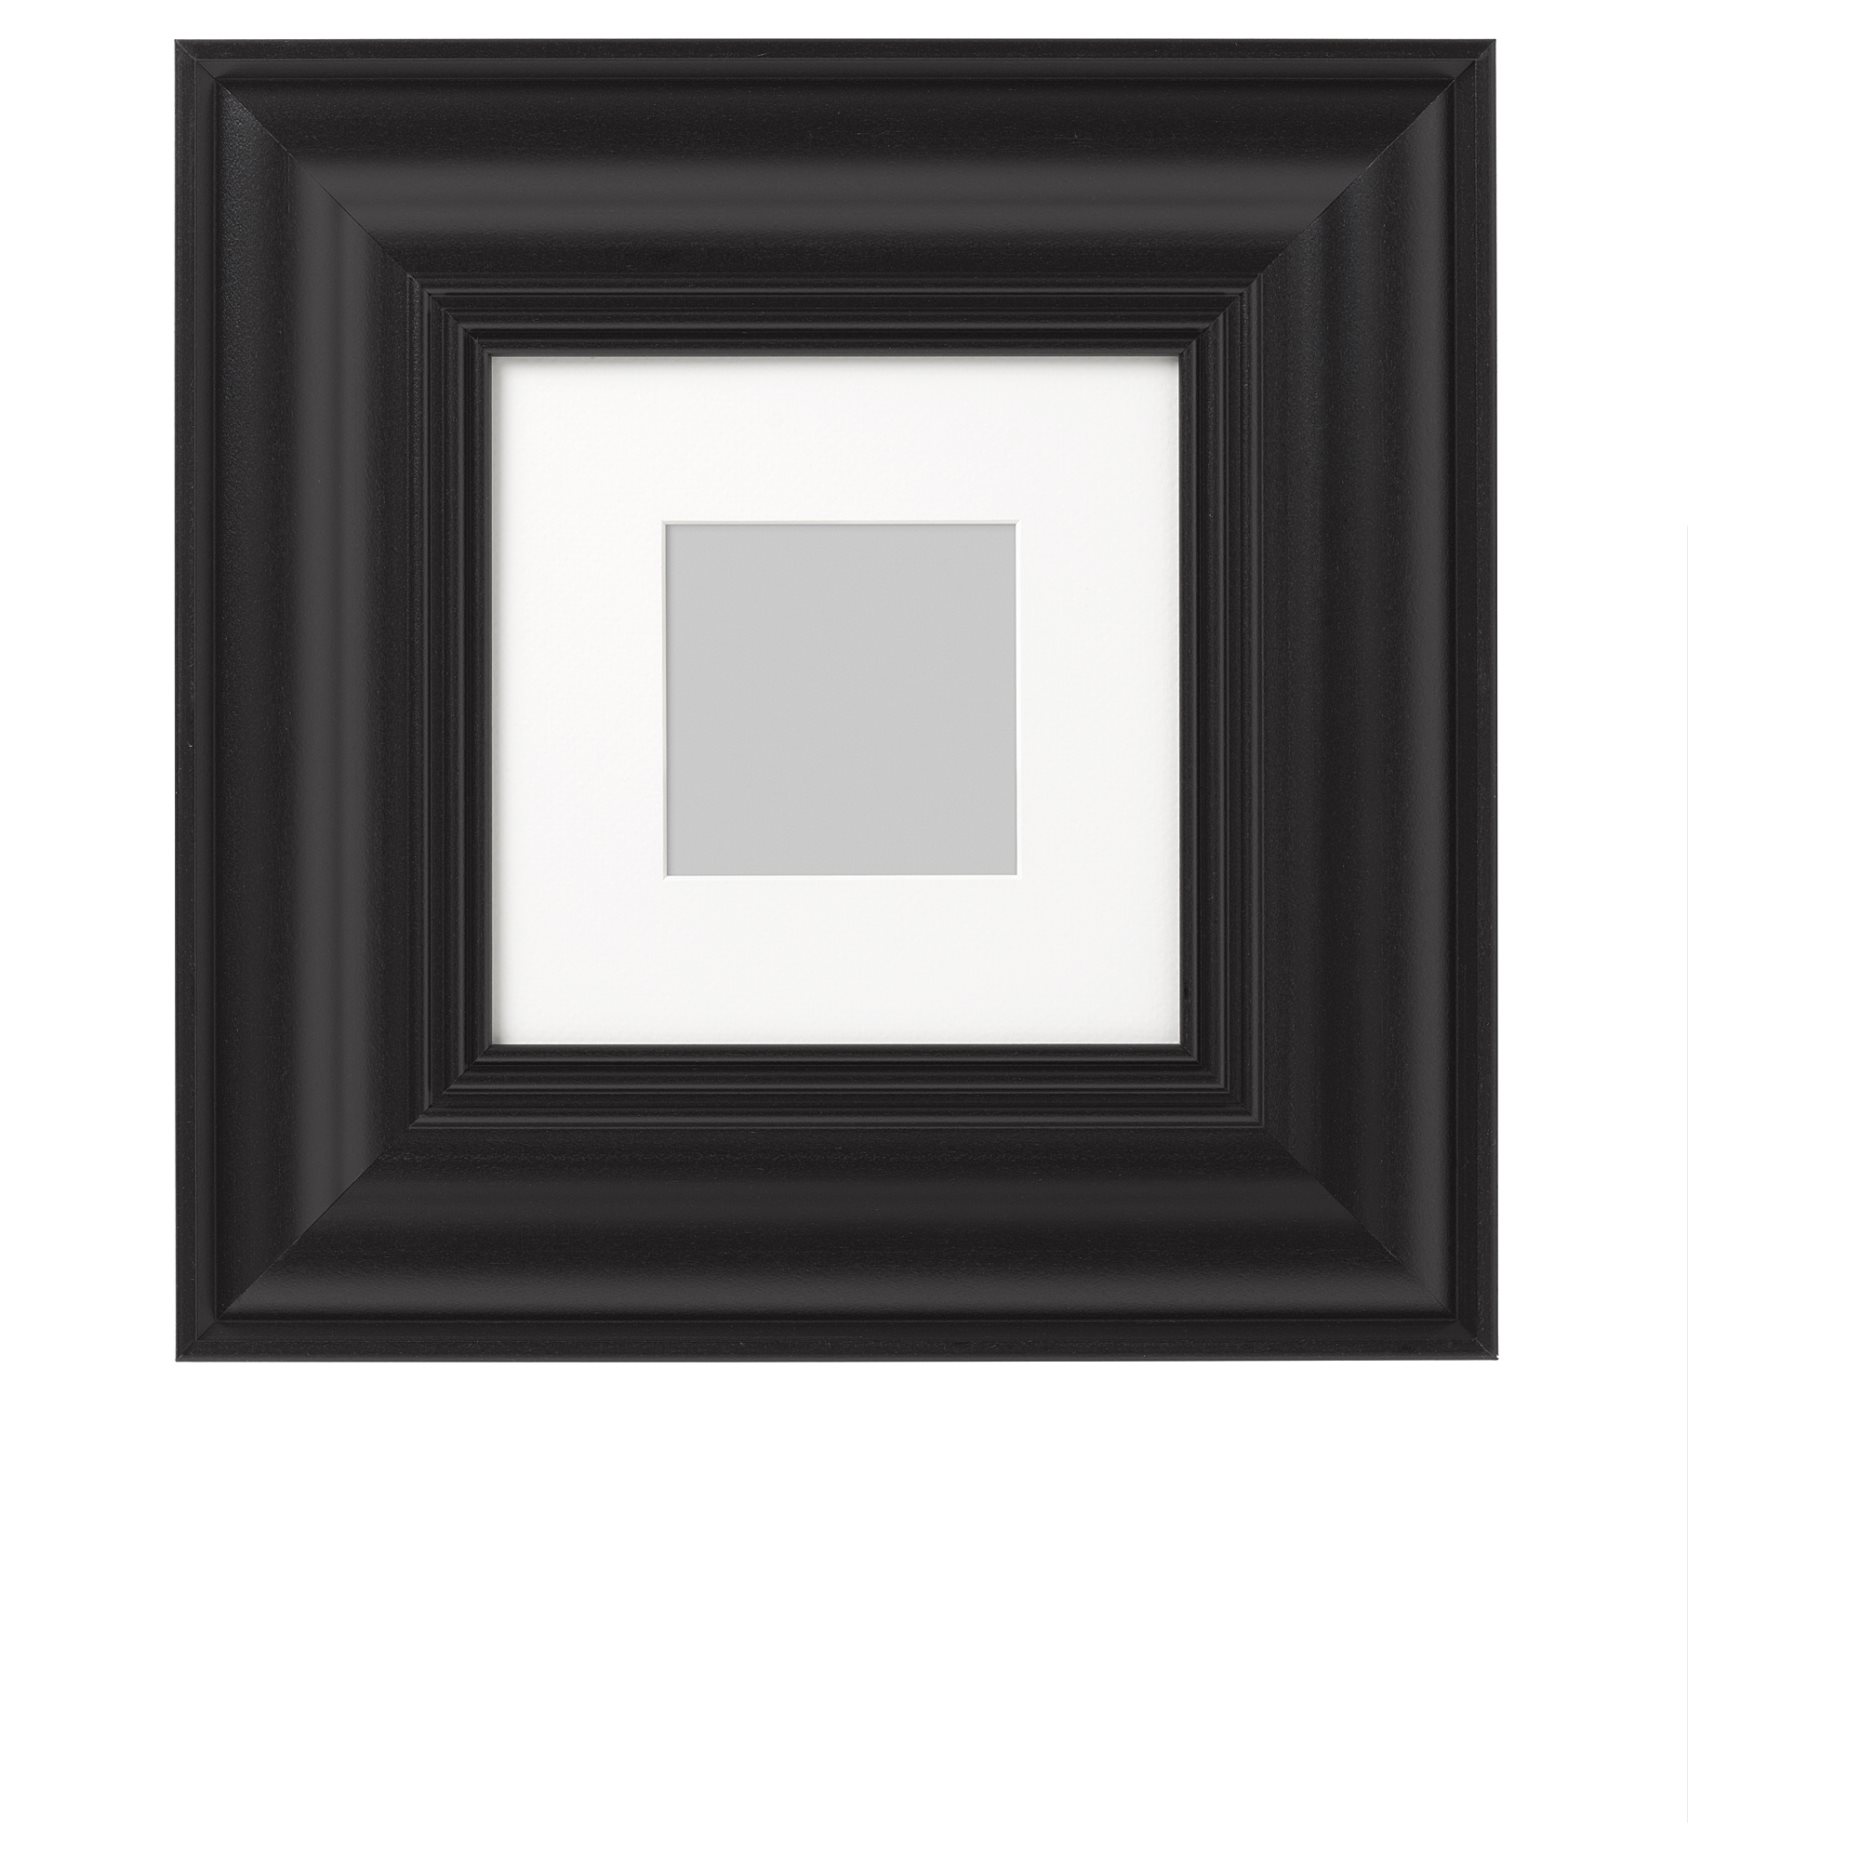 SKATTEBY, frame, 20x20 cm, 203.115.05